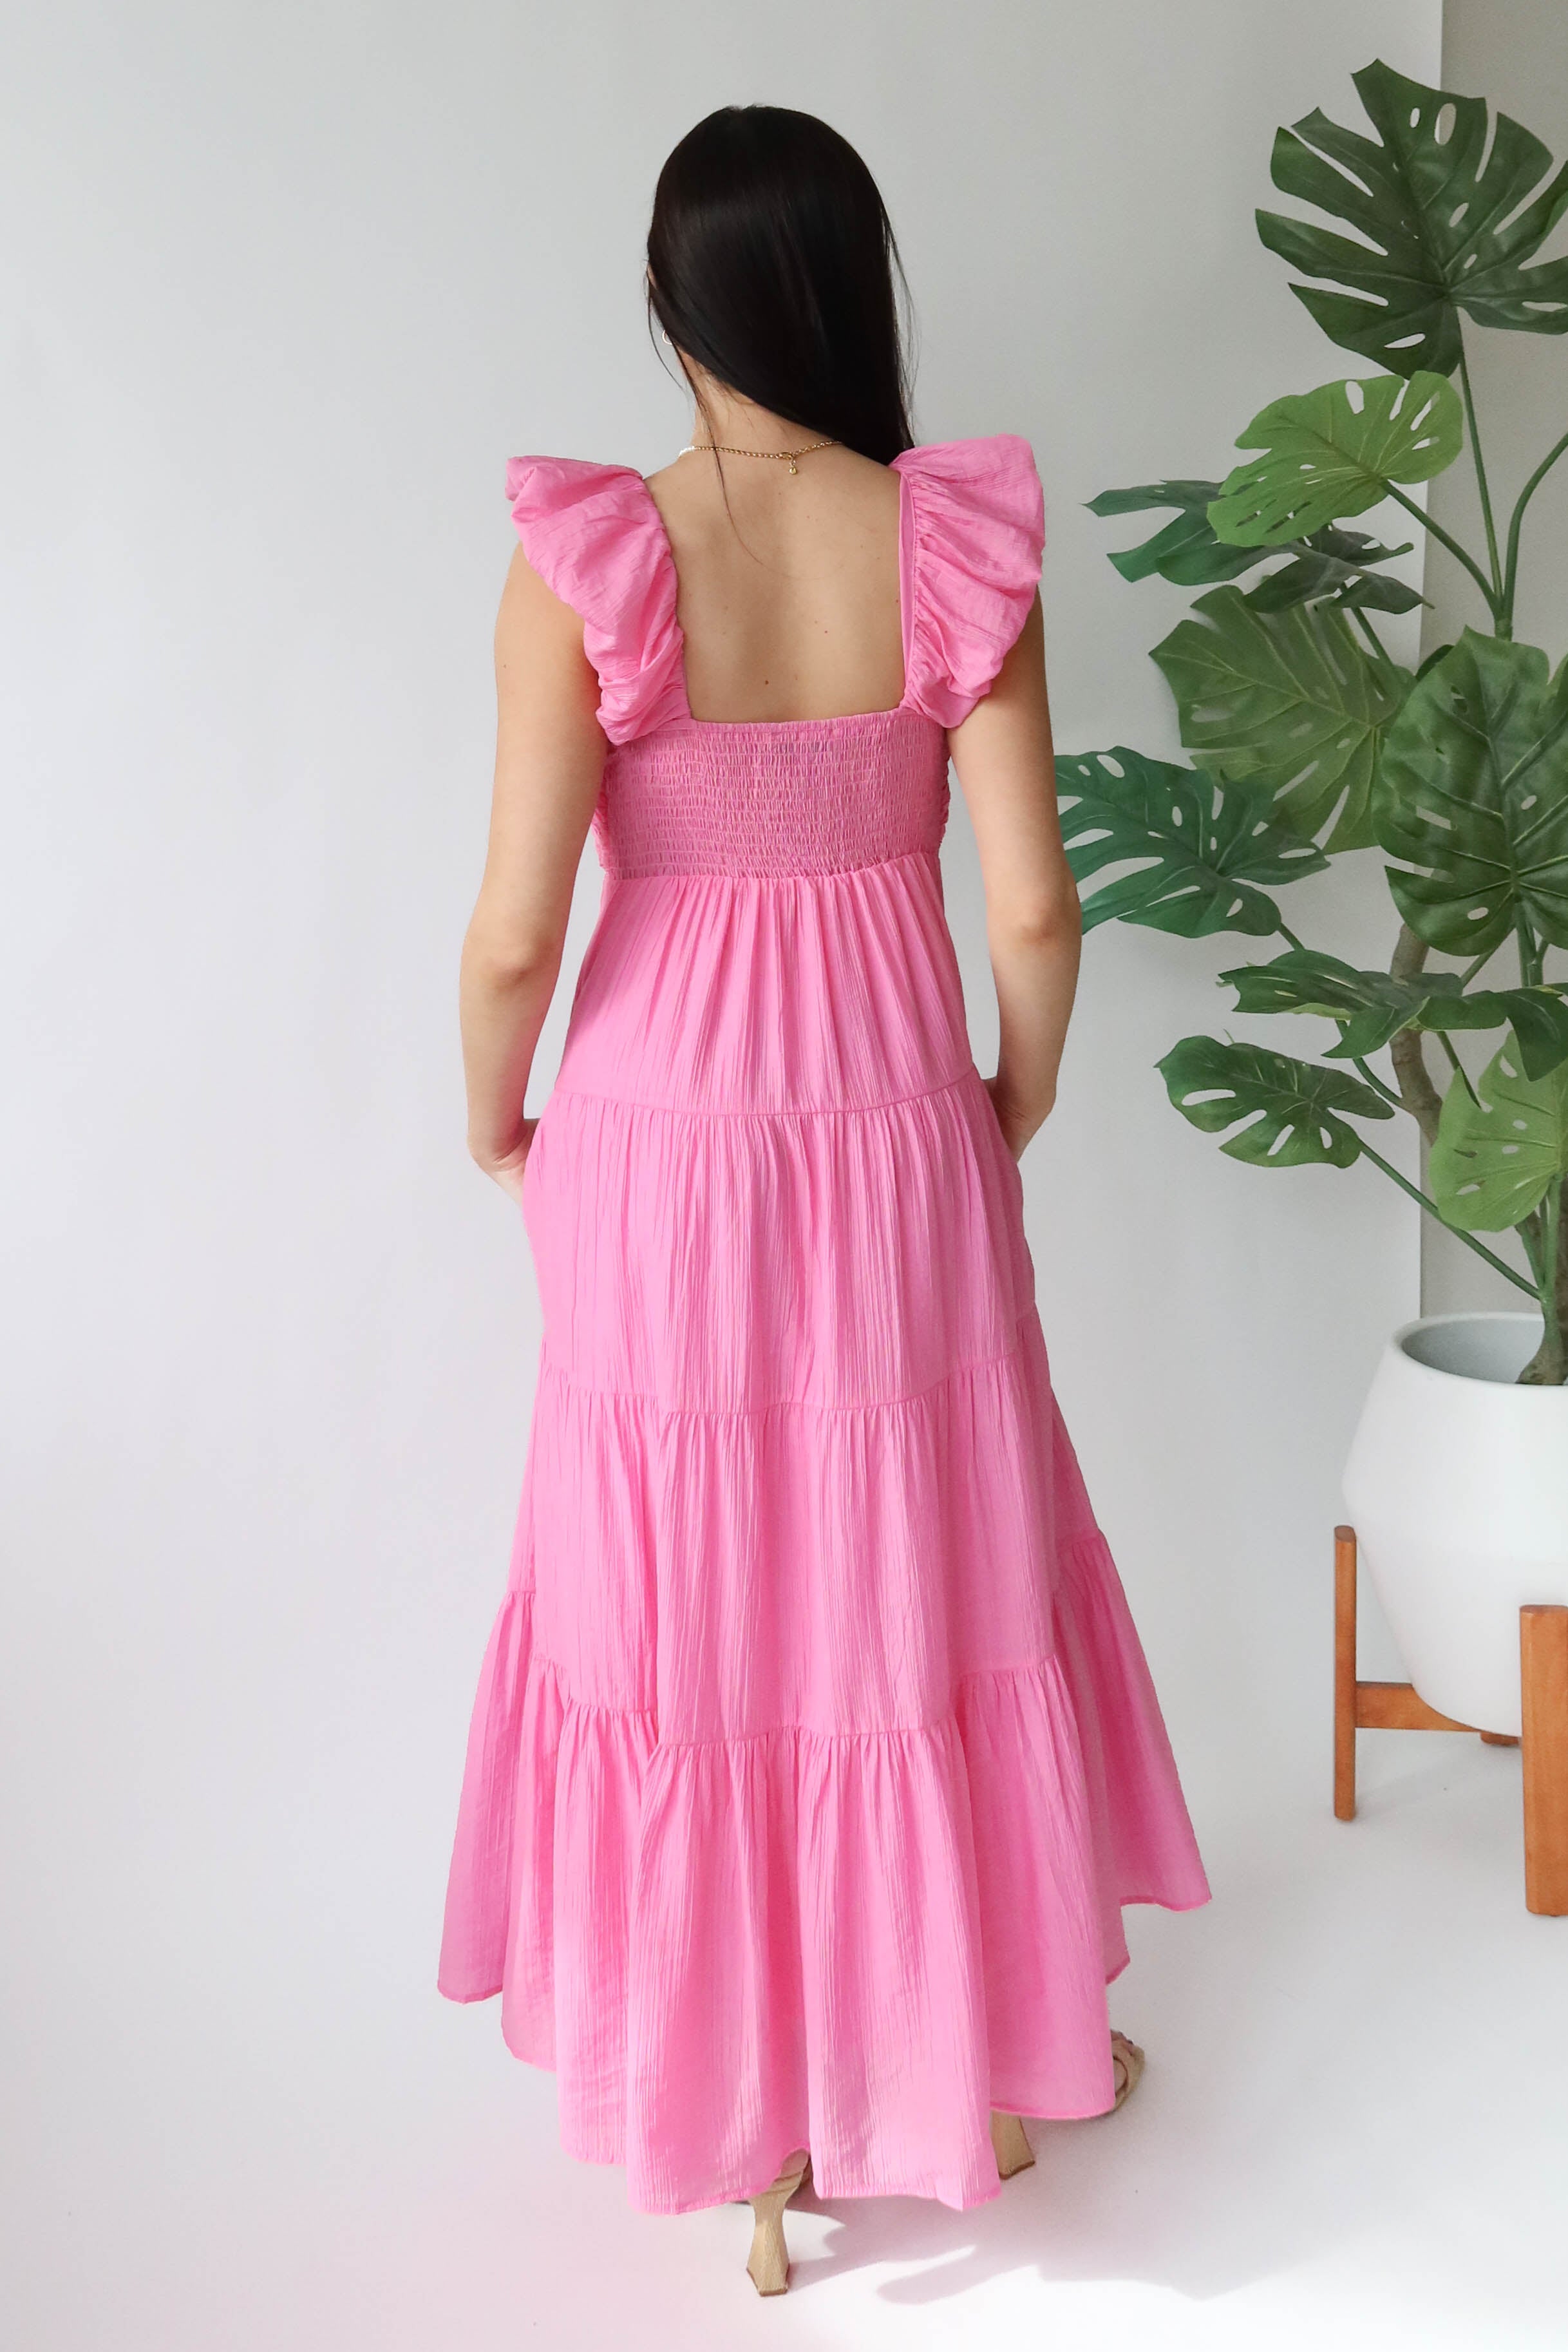 Getaway Dress in Pink